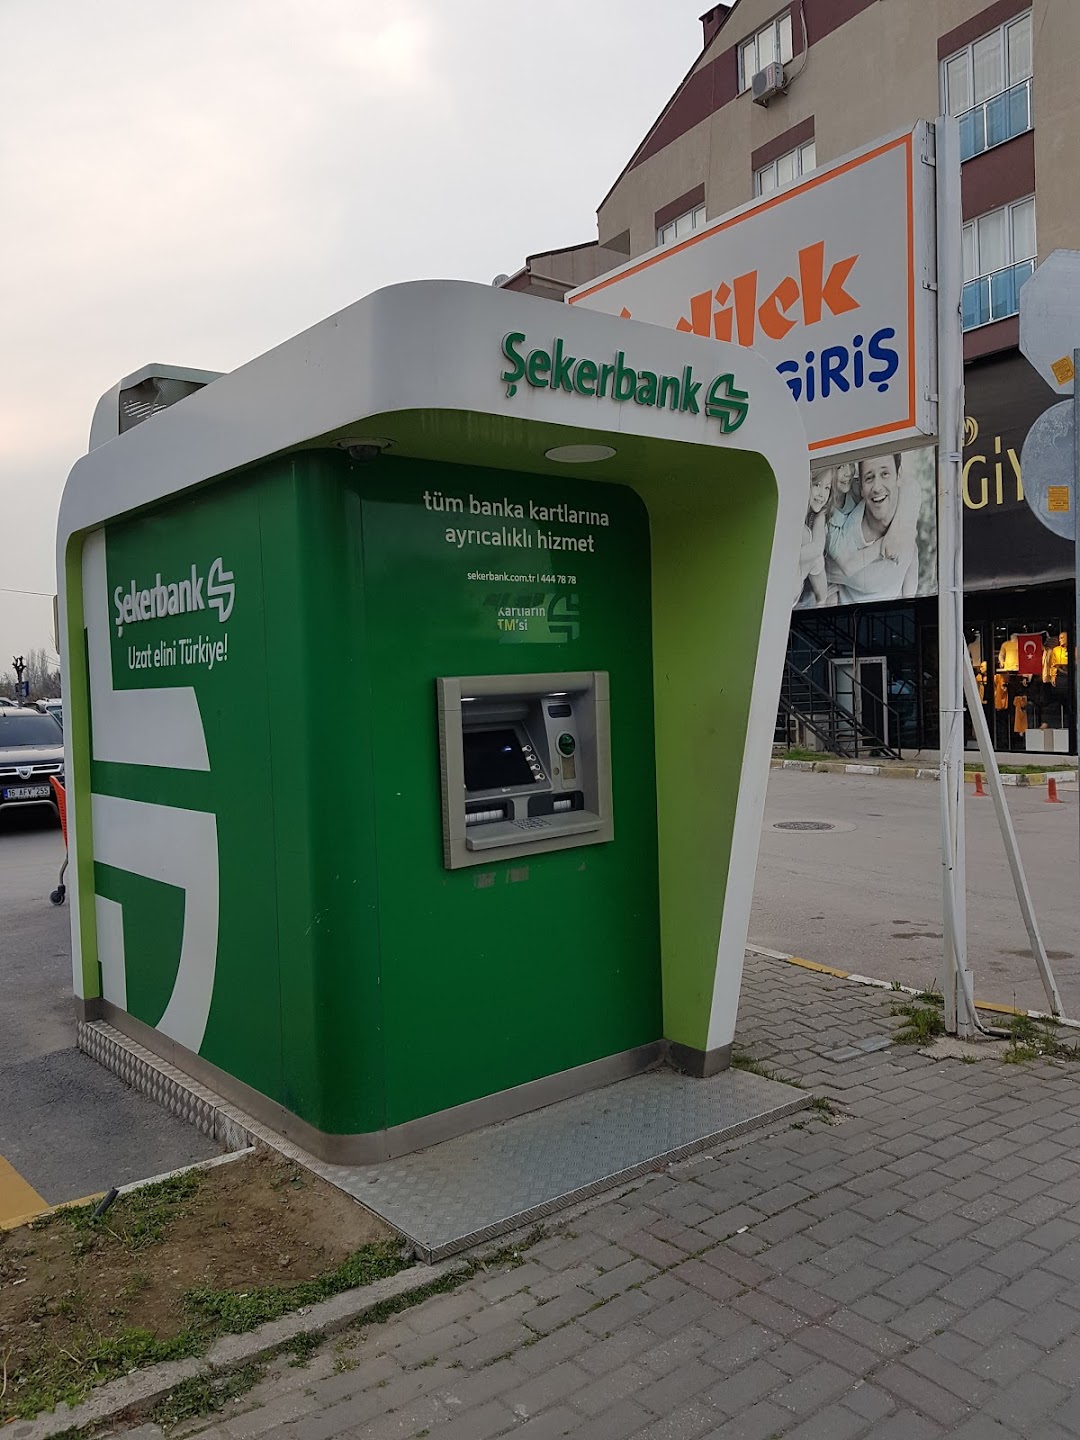 ekerbank ATM